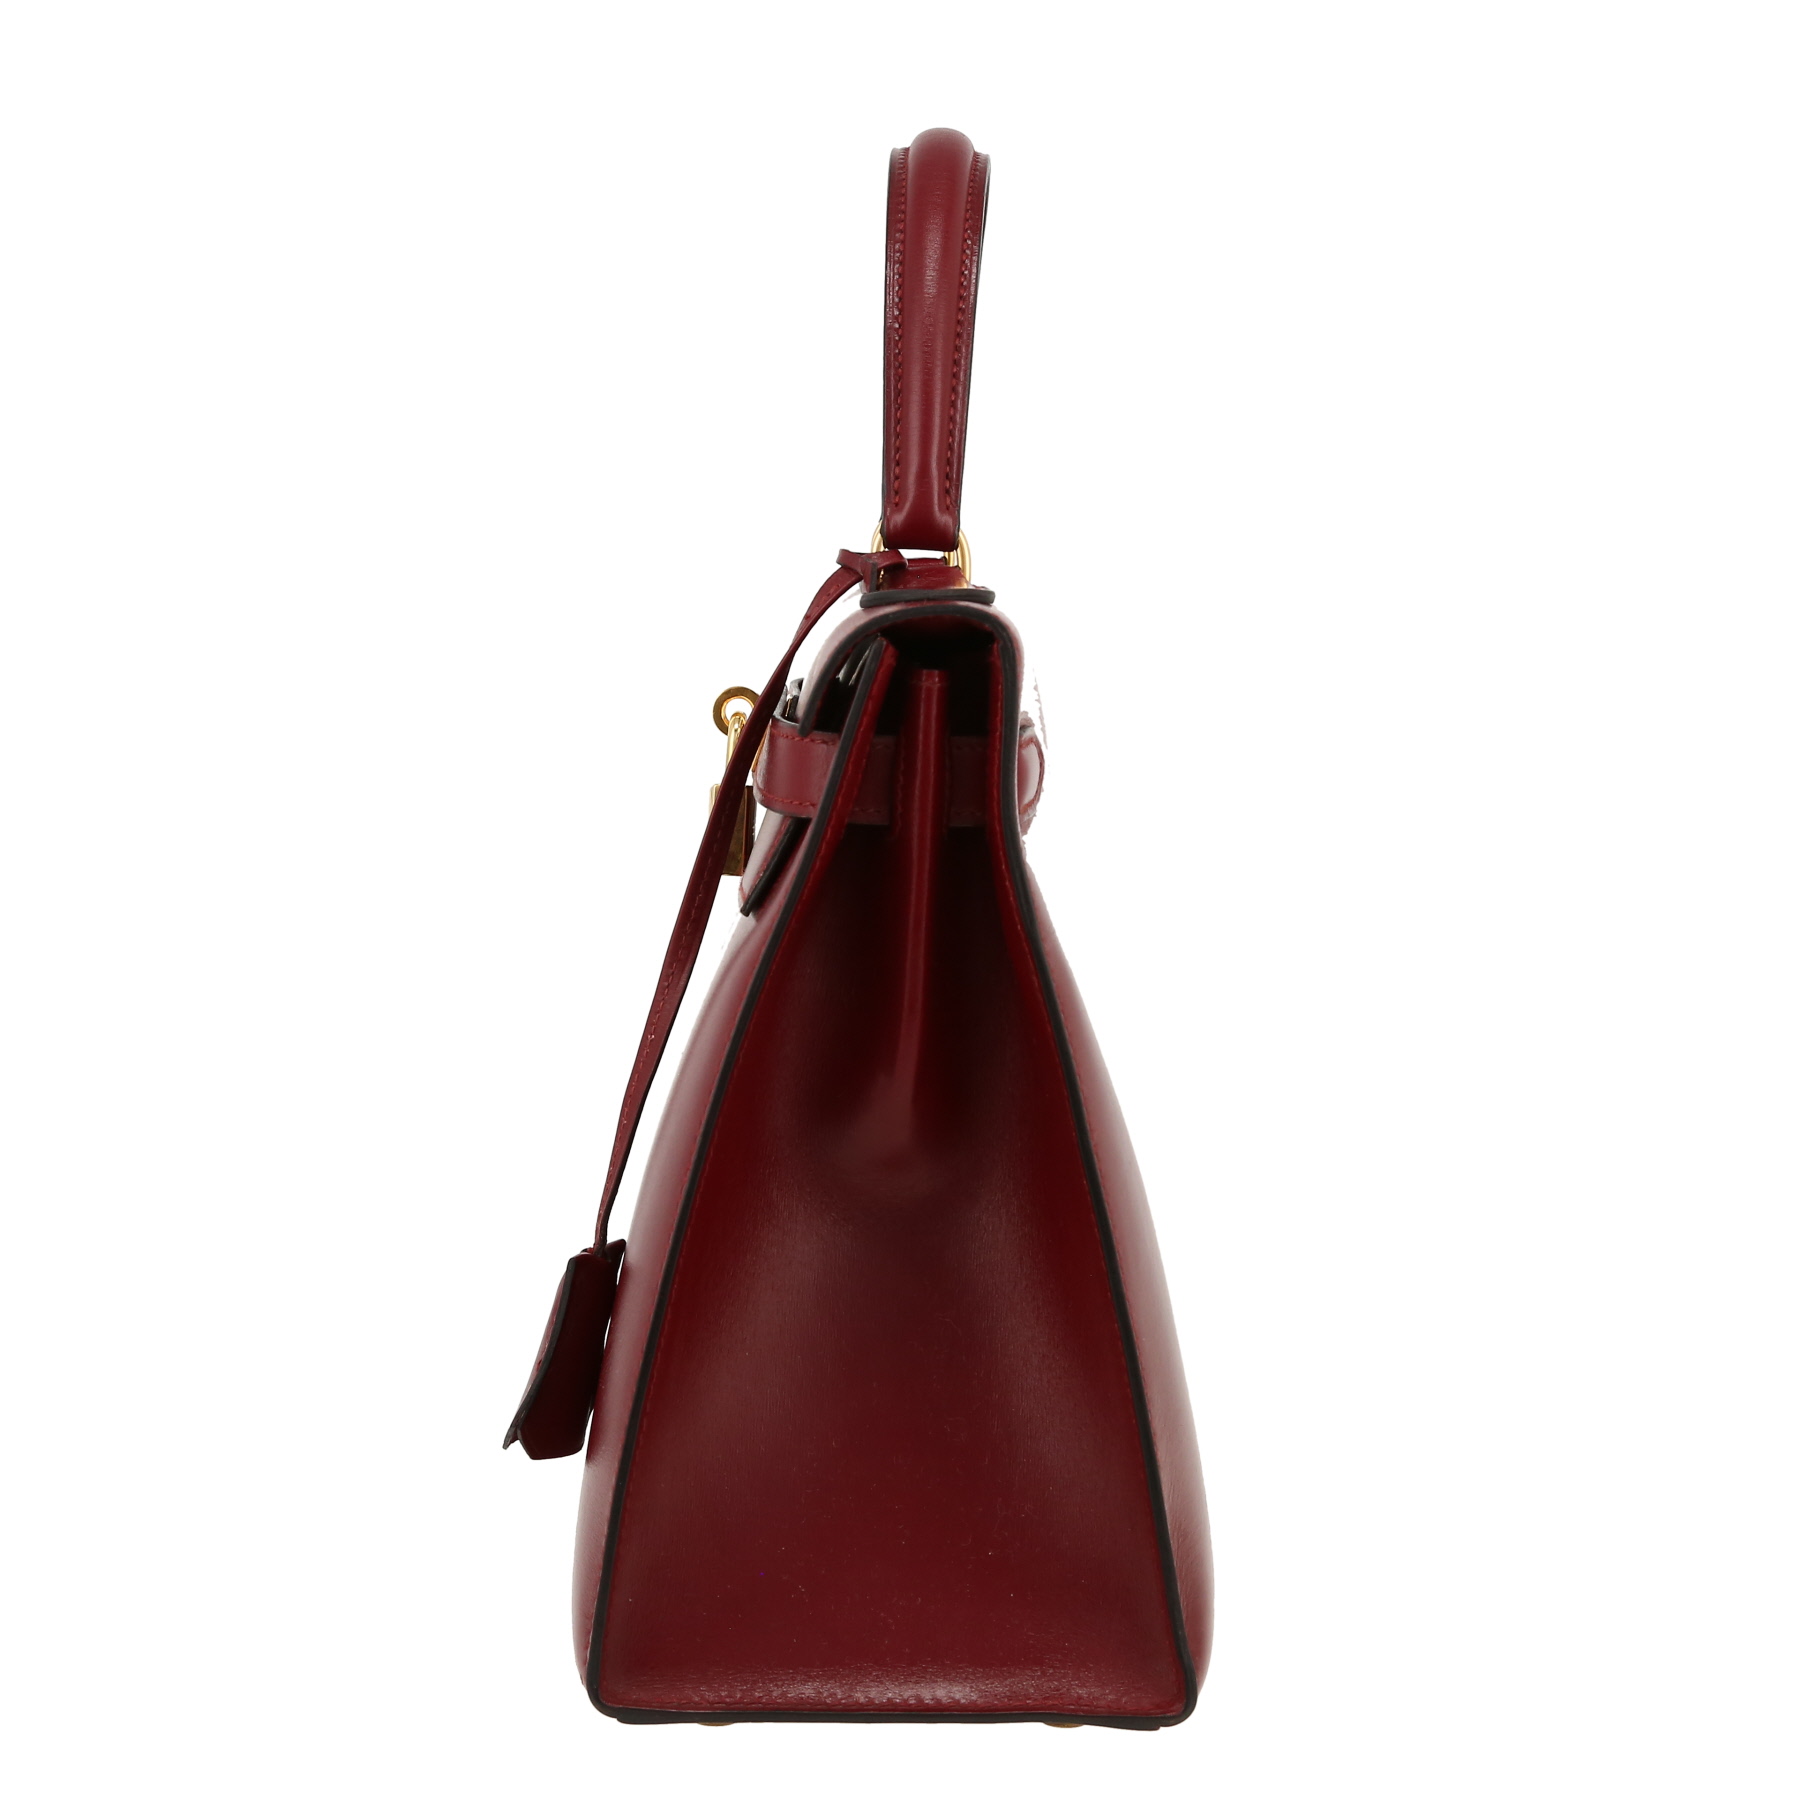 Kelly 28 cm Handbag In H Box Leather